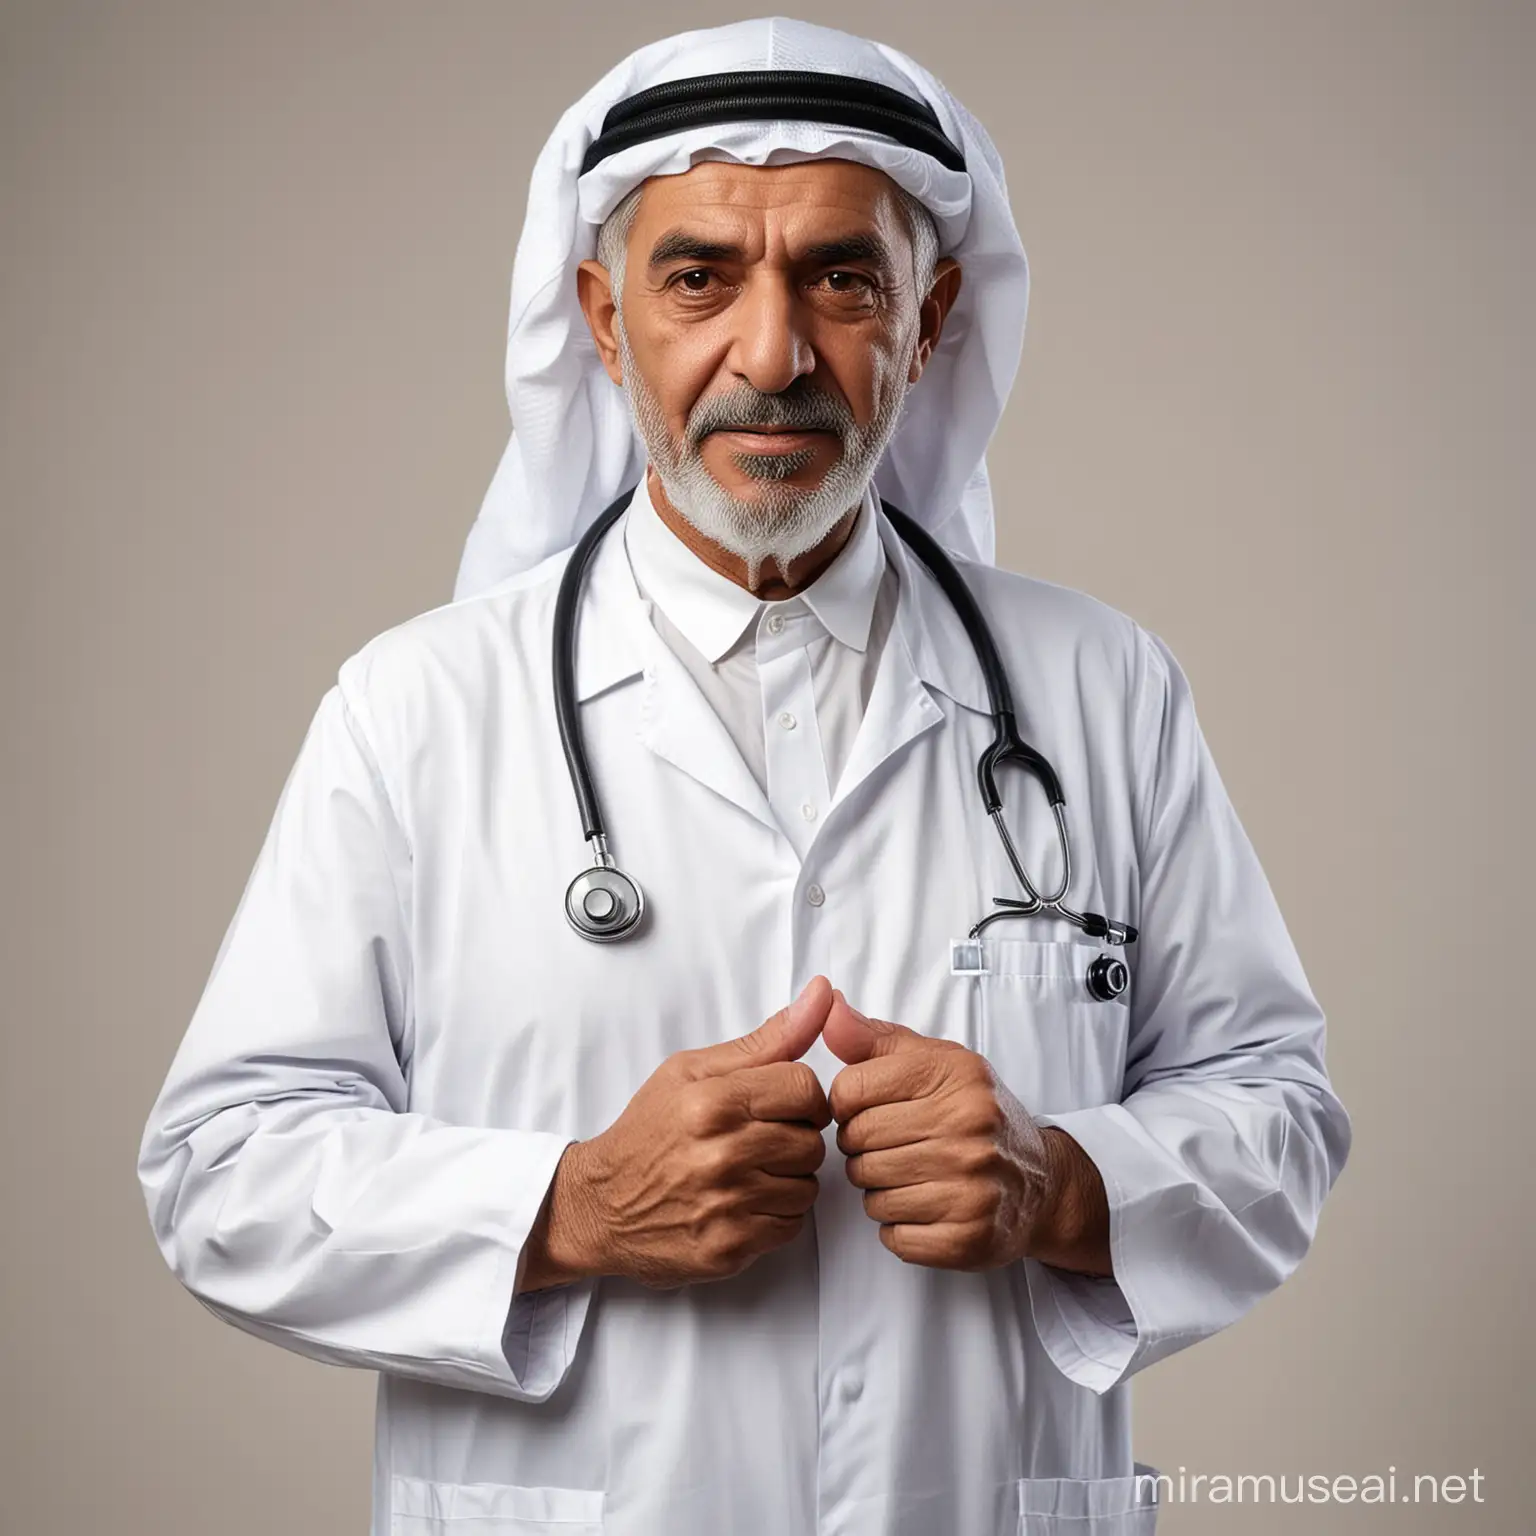 Elderly Arab Man in Doctor Attire Engaged in Direct Conversation